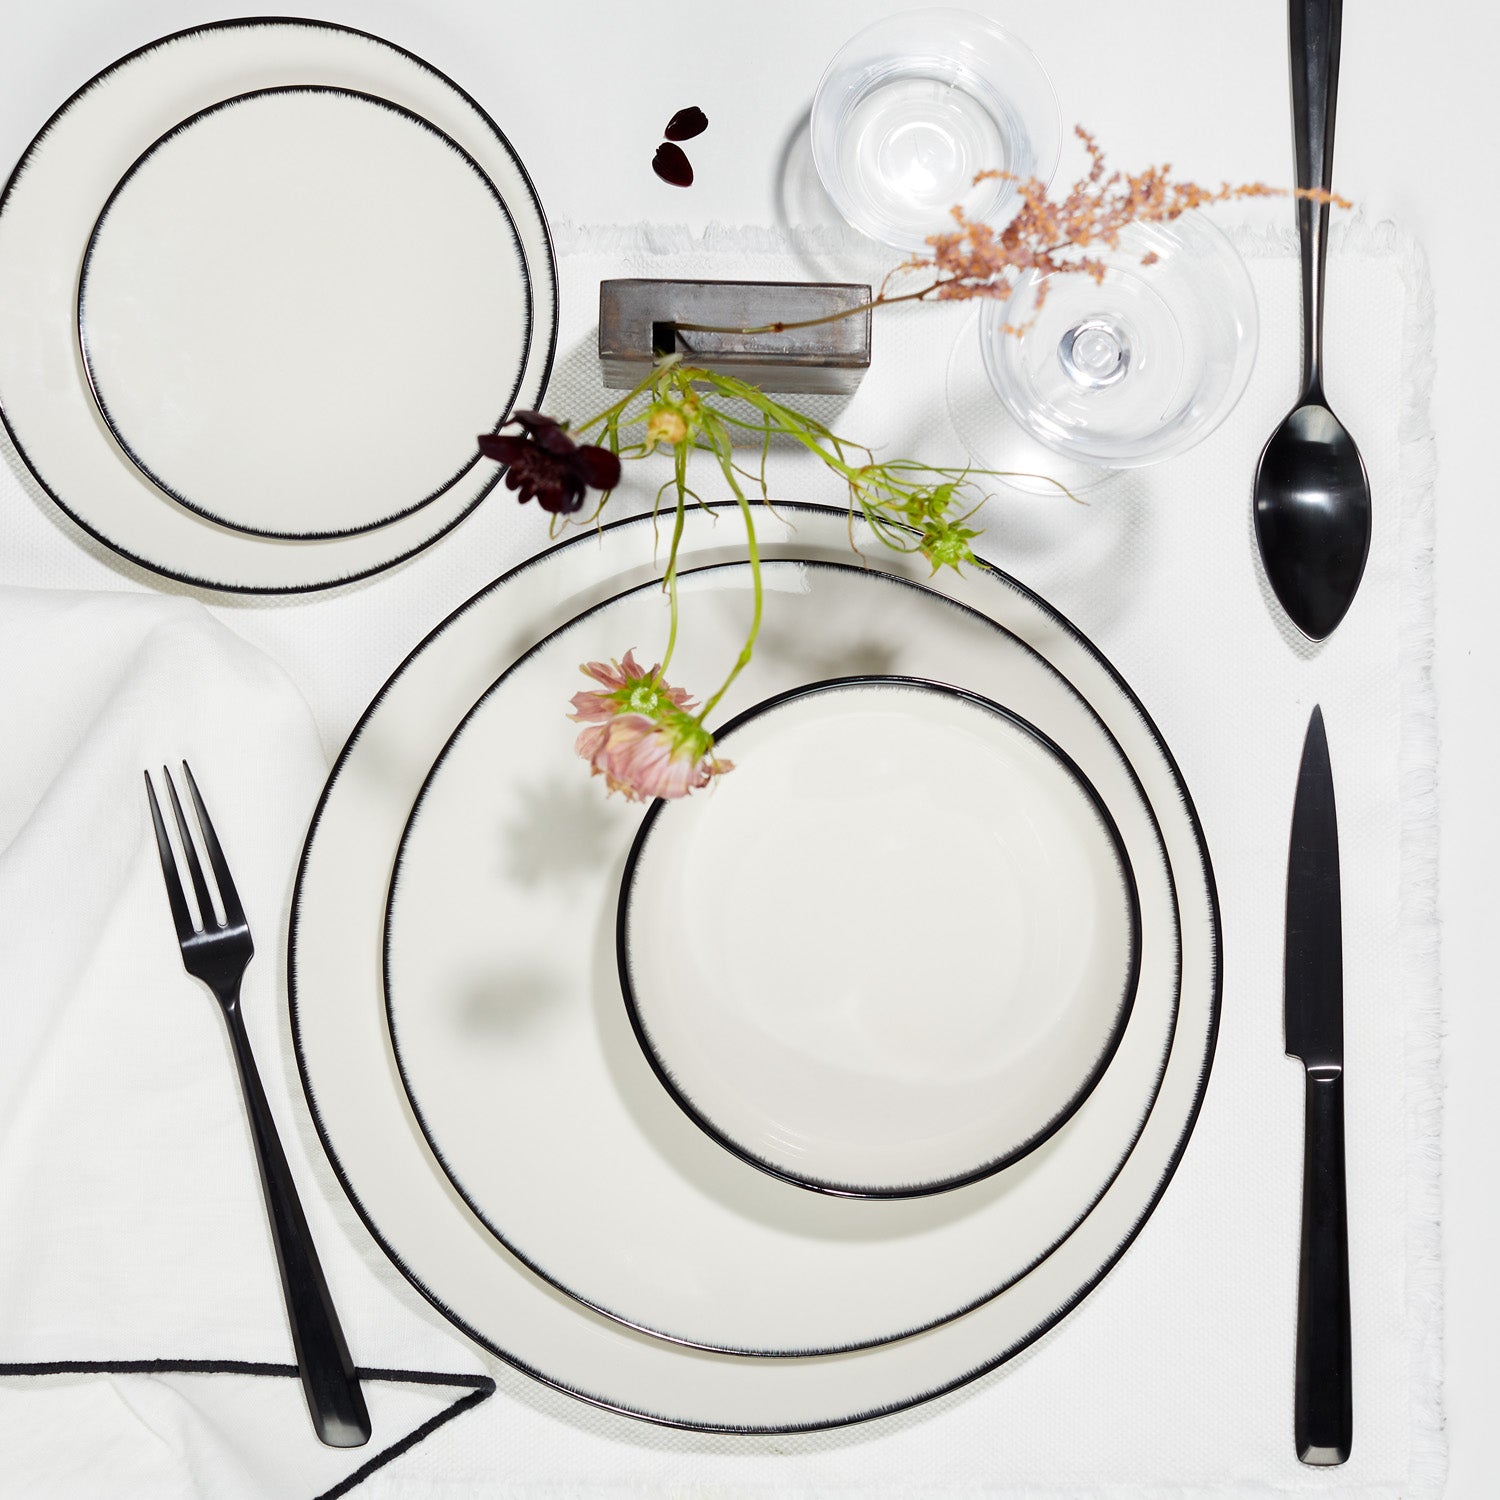 Modern and elegant table setting with minimalist black utensils.